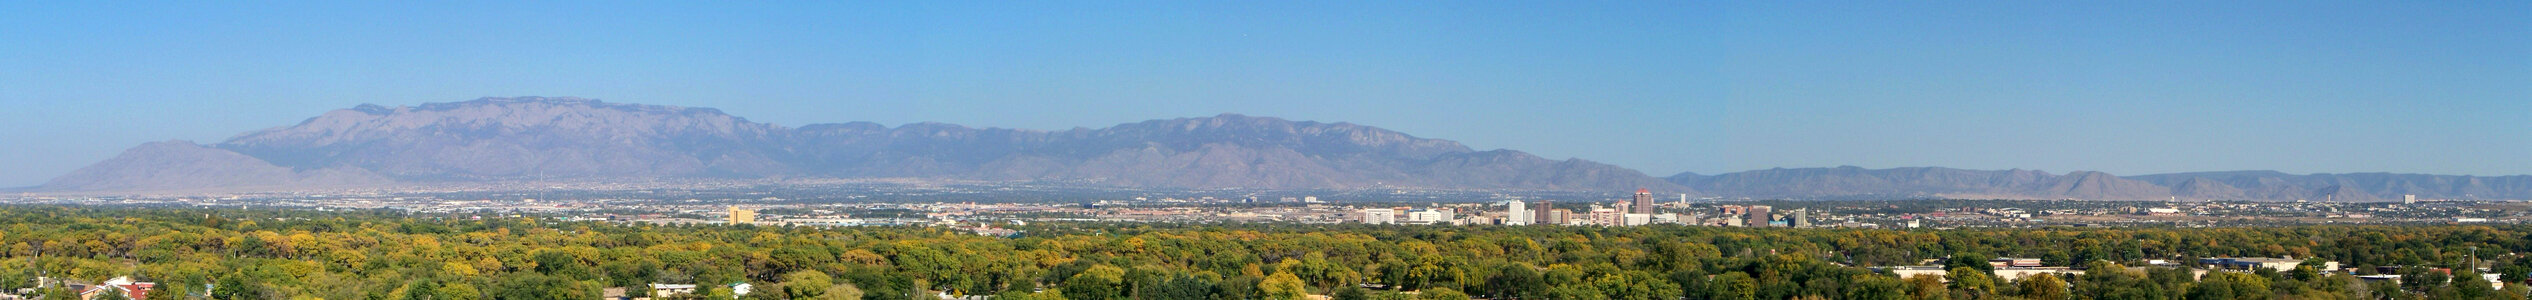 Panoramic View of Albuquerque, New Mexico photo